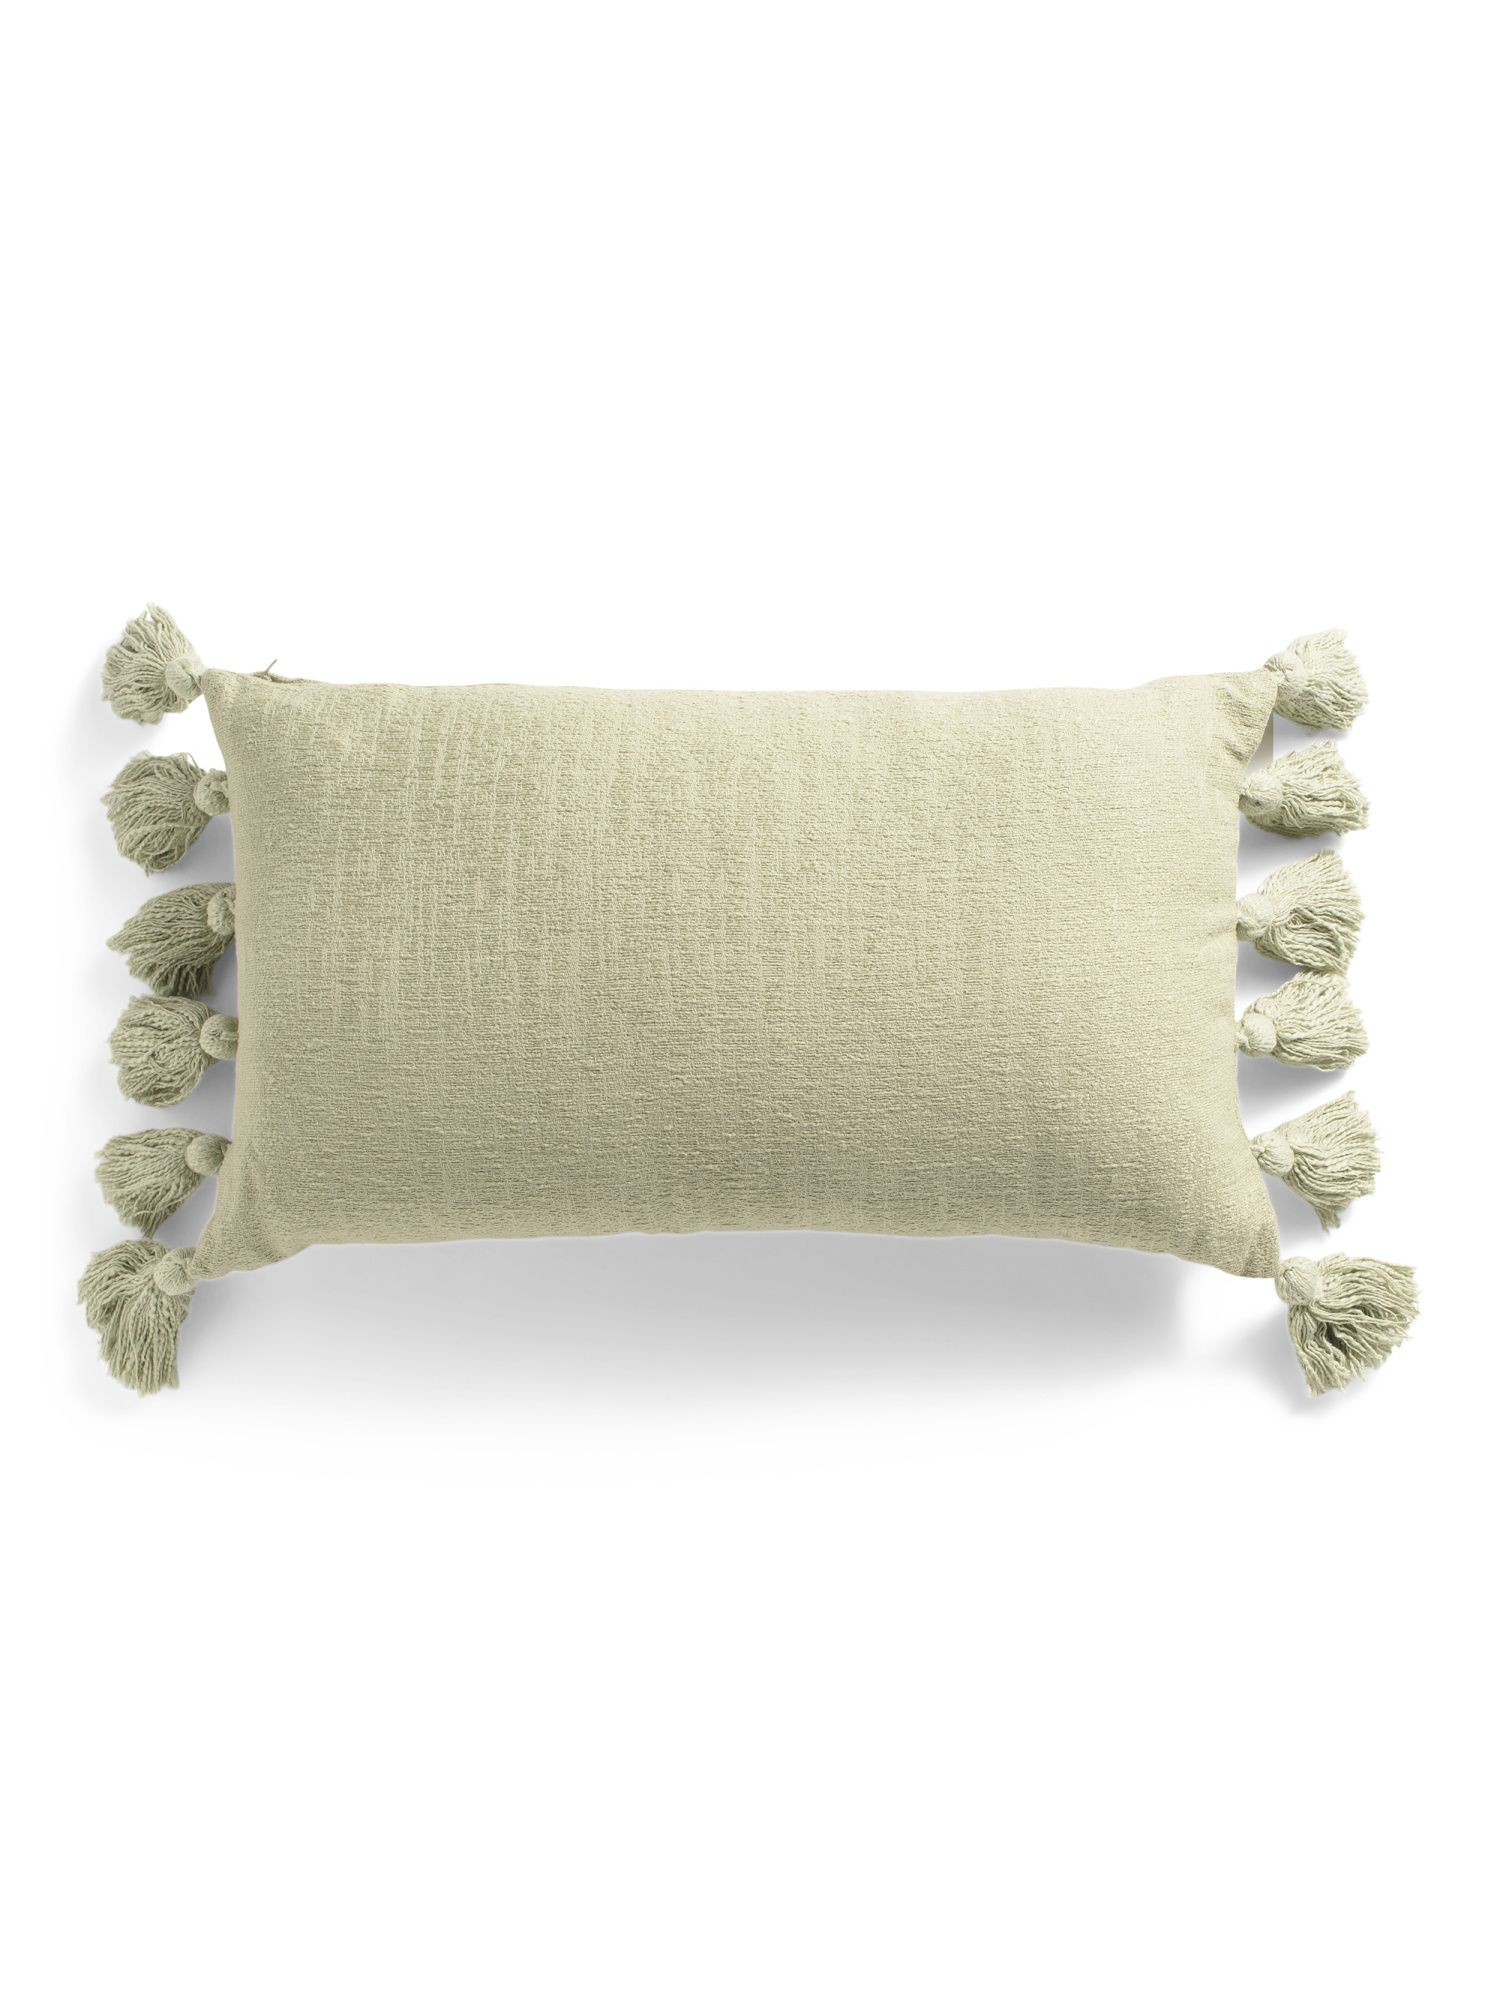 14x24 Linen Blend Woven Pillow With Tassels | Home Essentials | Marshalls | Marshalls